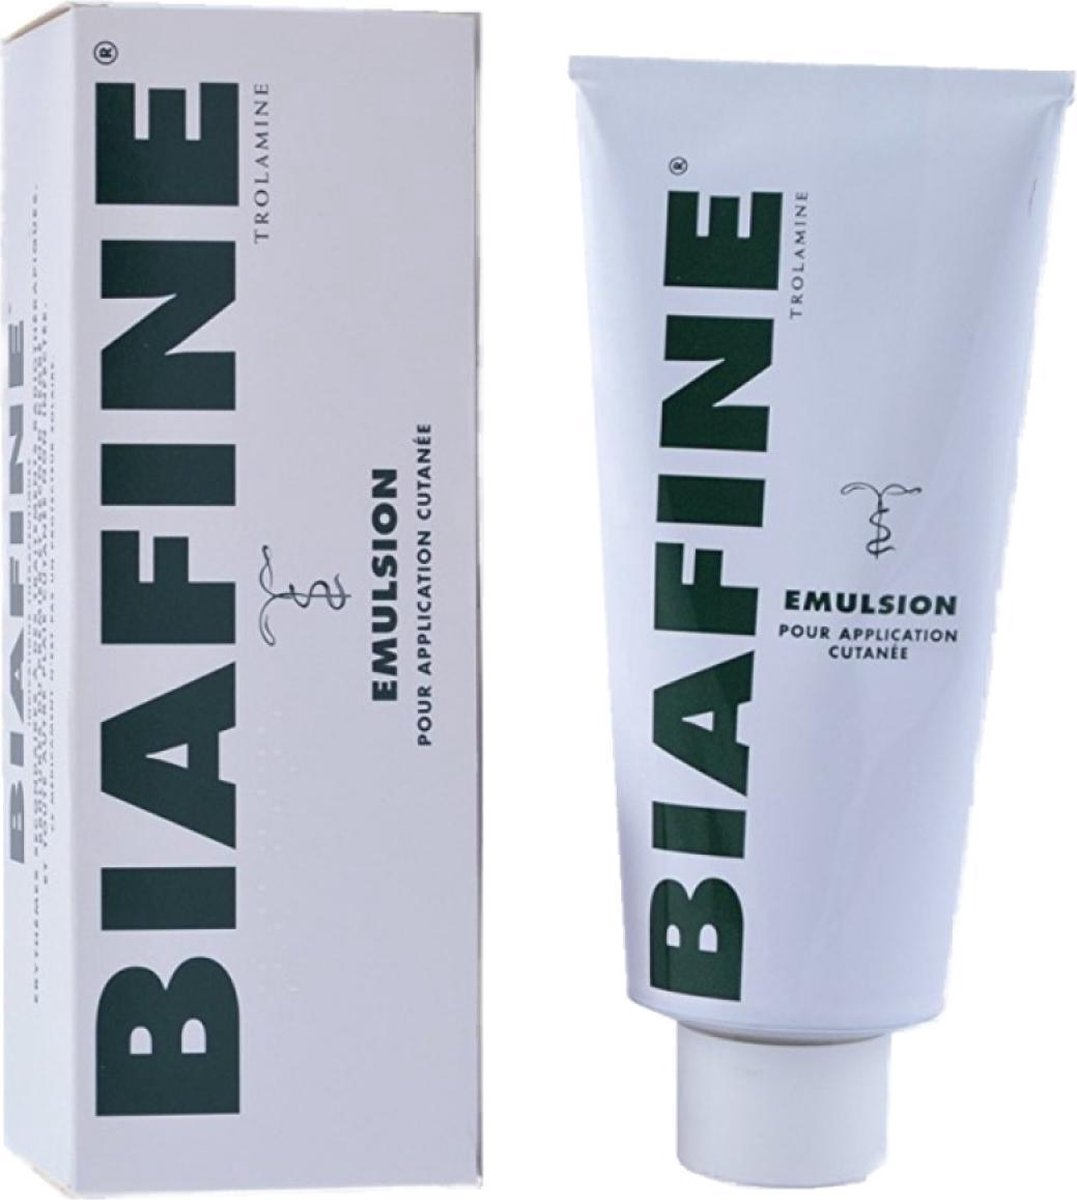 Biafine Emulsion - 186g - Trolamine | bol.com